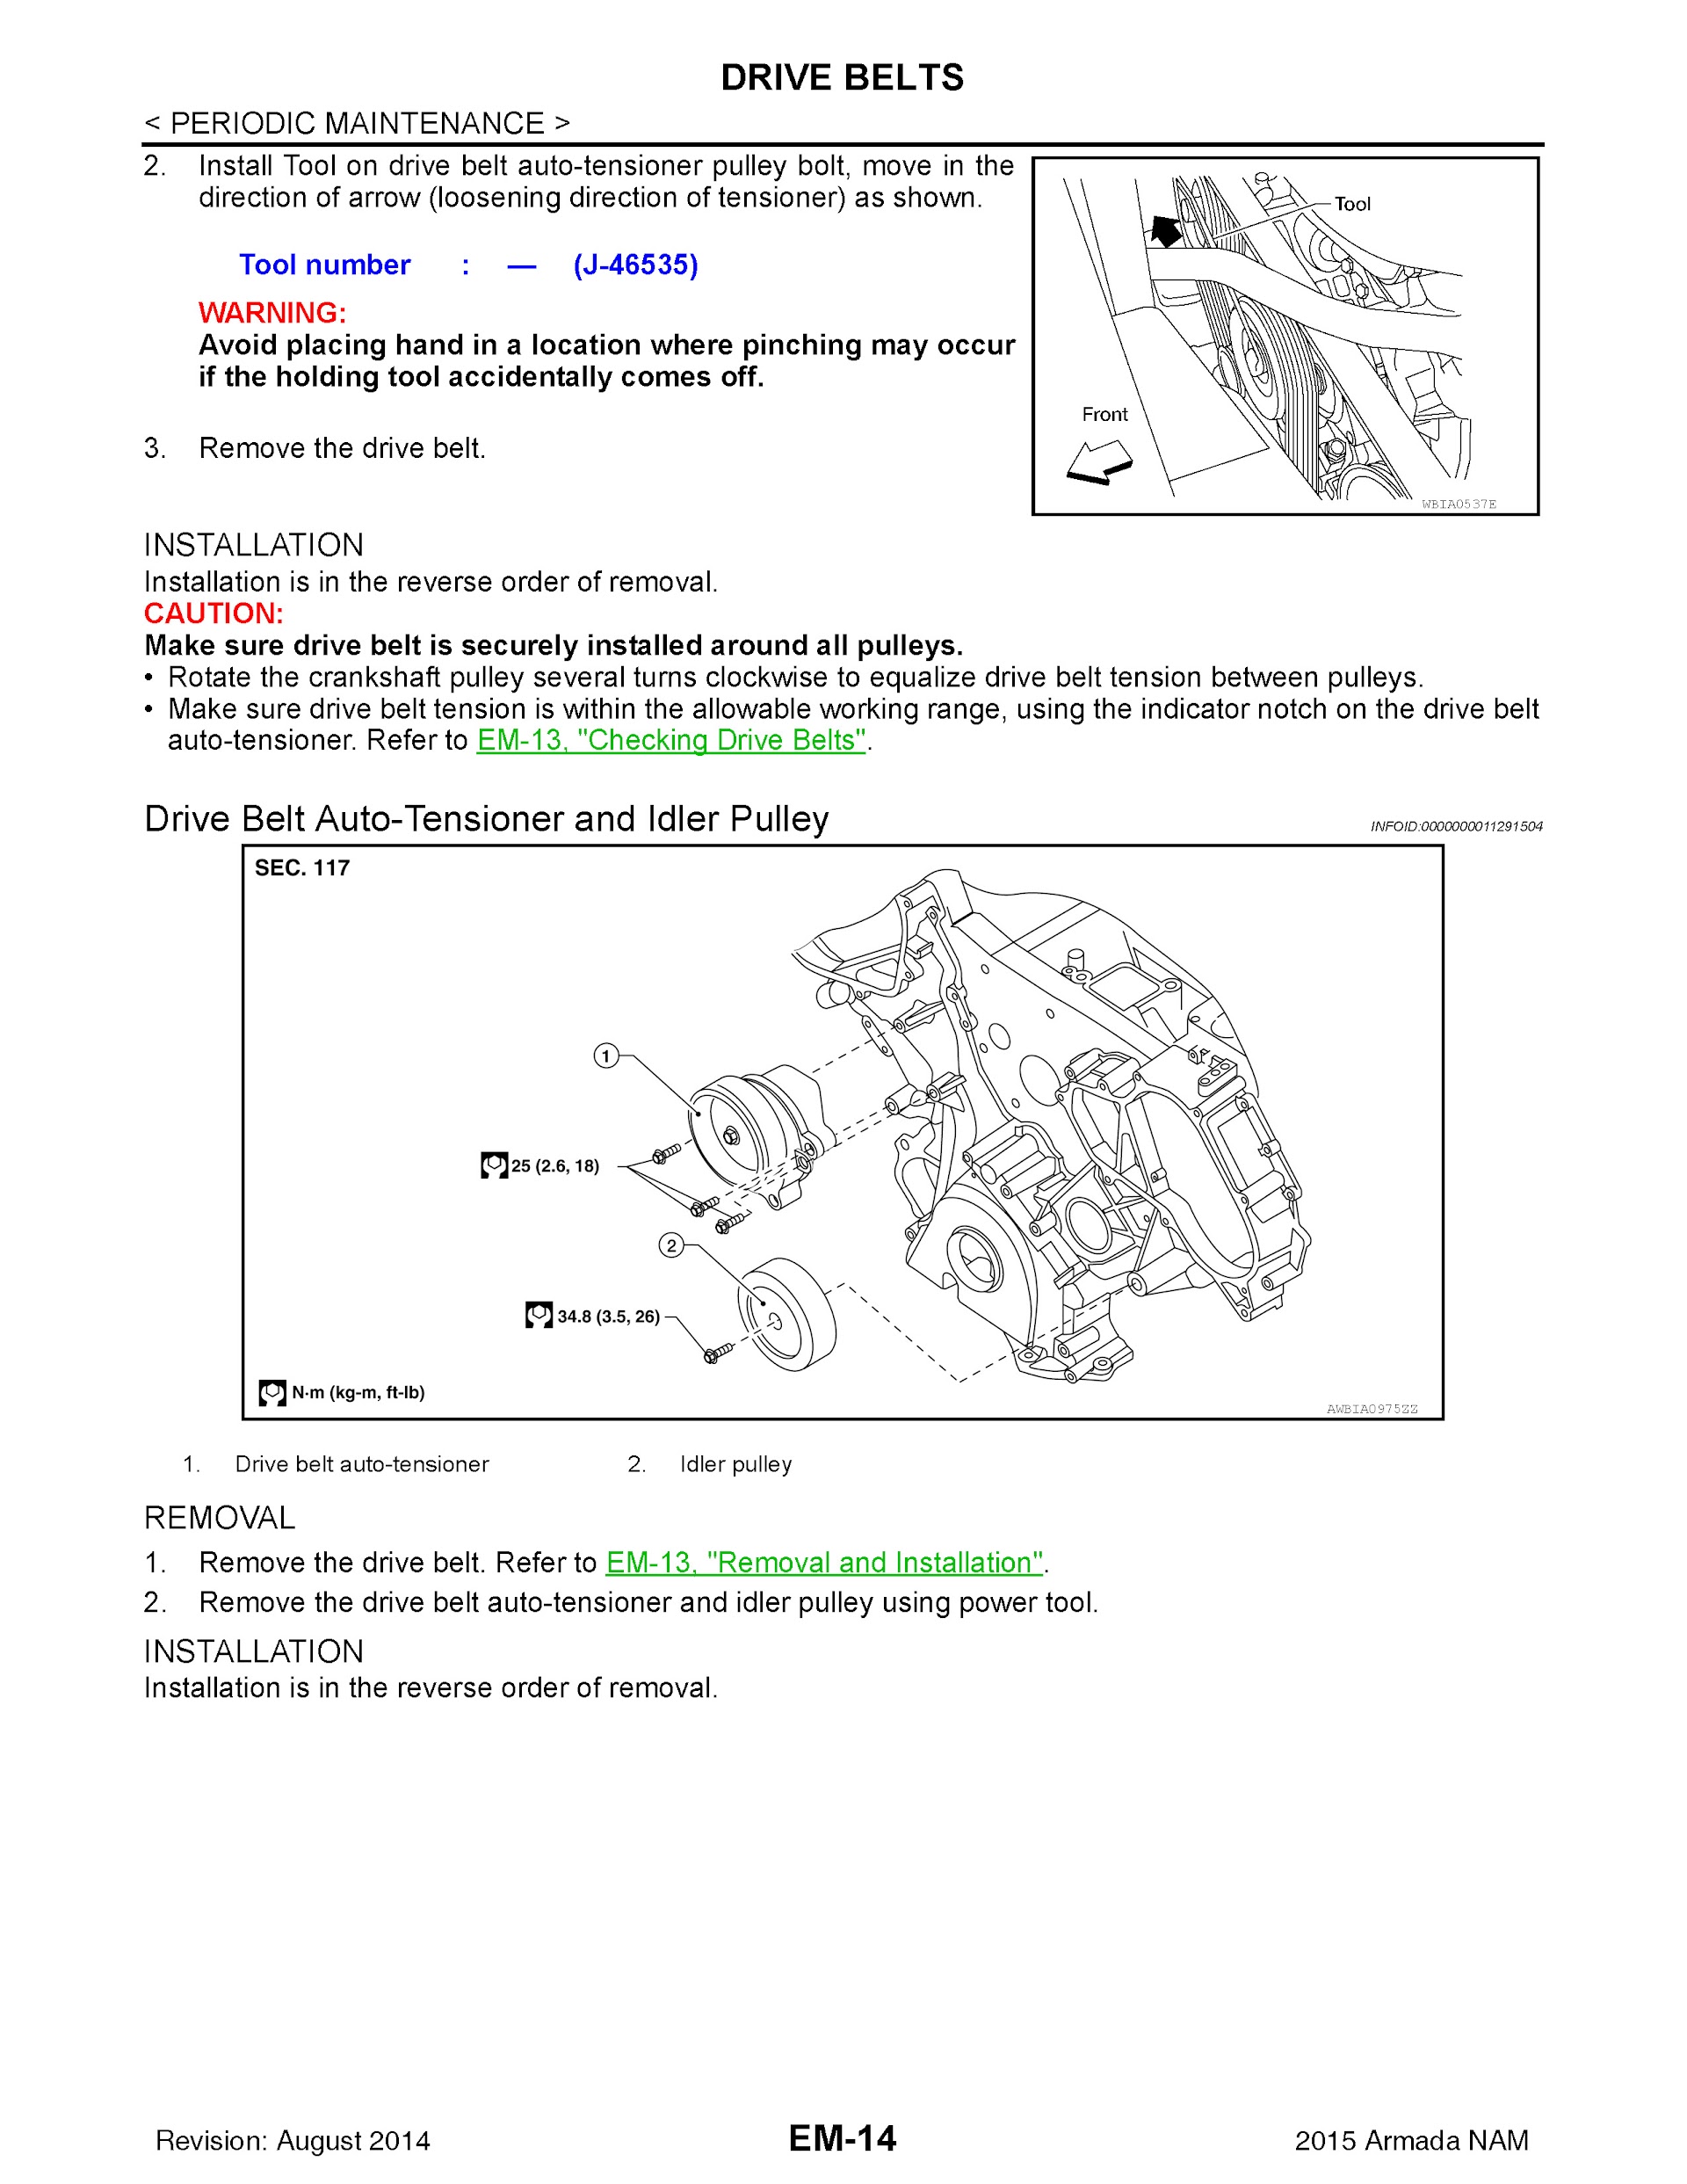 2015 Nissan Armada Repair Manual, Drive Belt Removal and Installation